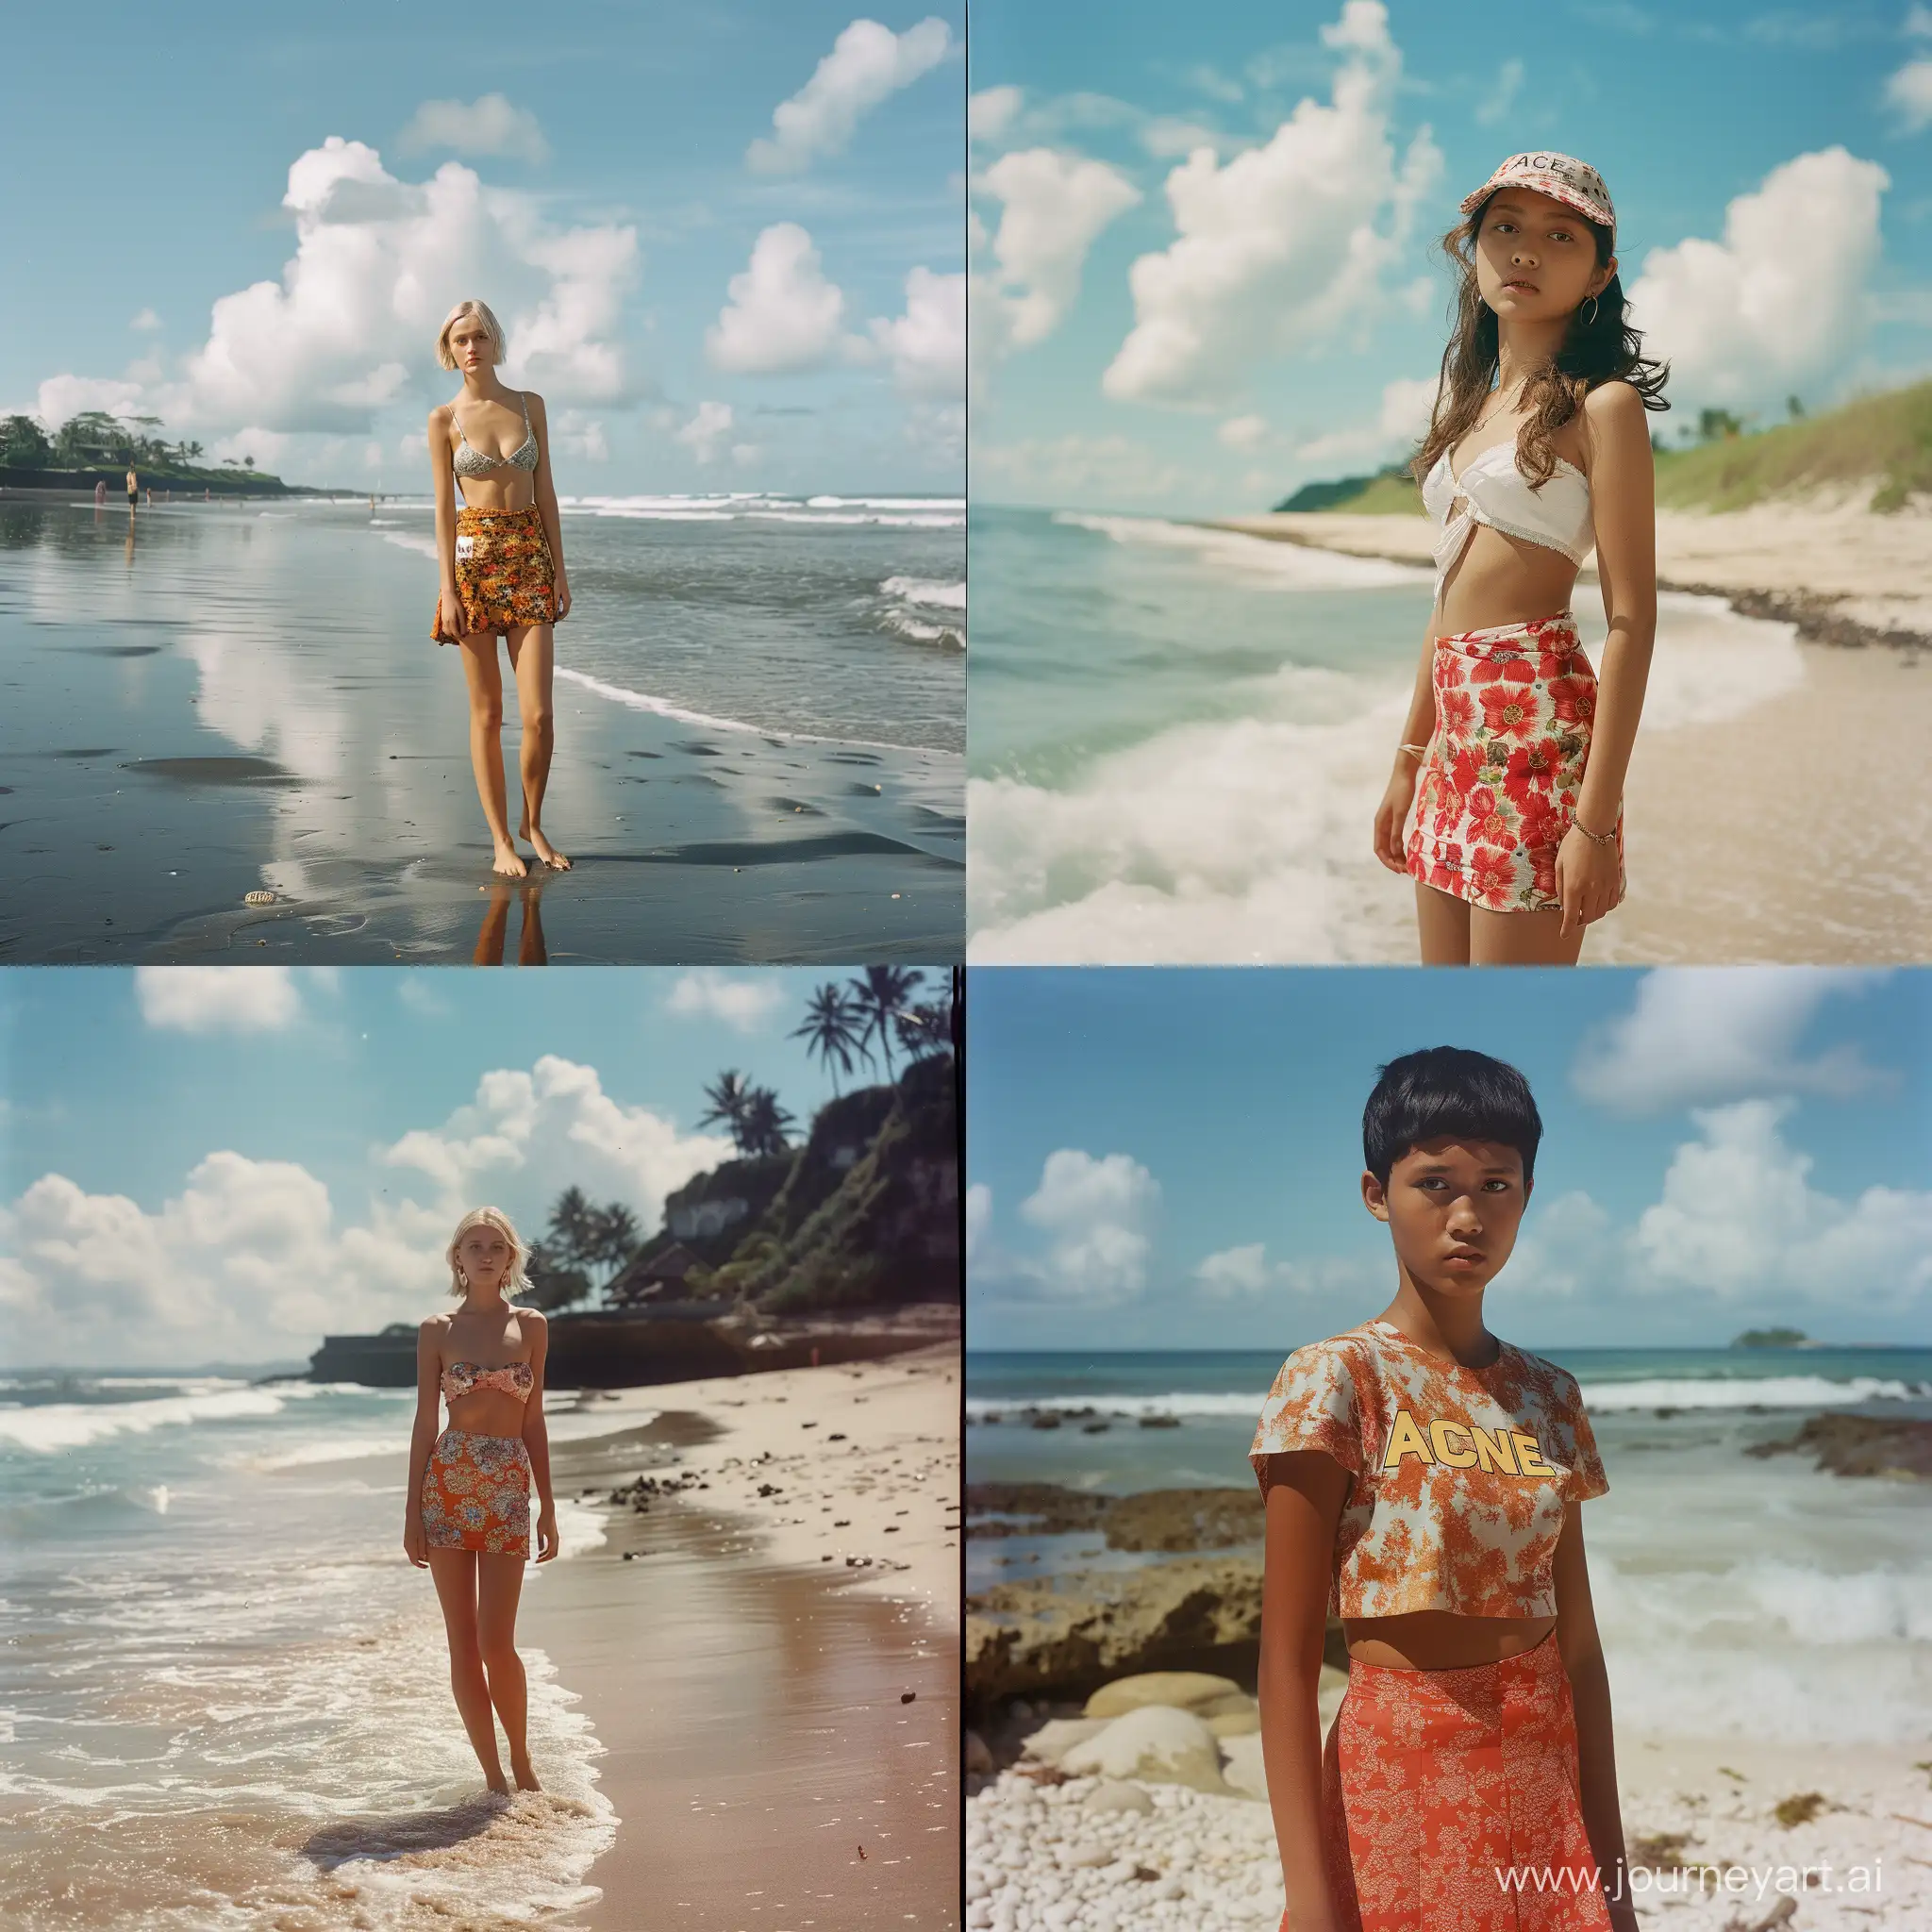 Swedish-Fashion-Model-in-Acne-Skirt-Beachside-Elegance-in-Bali